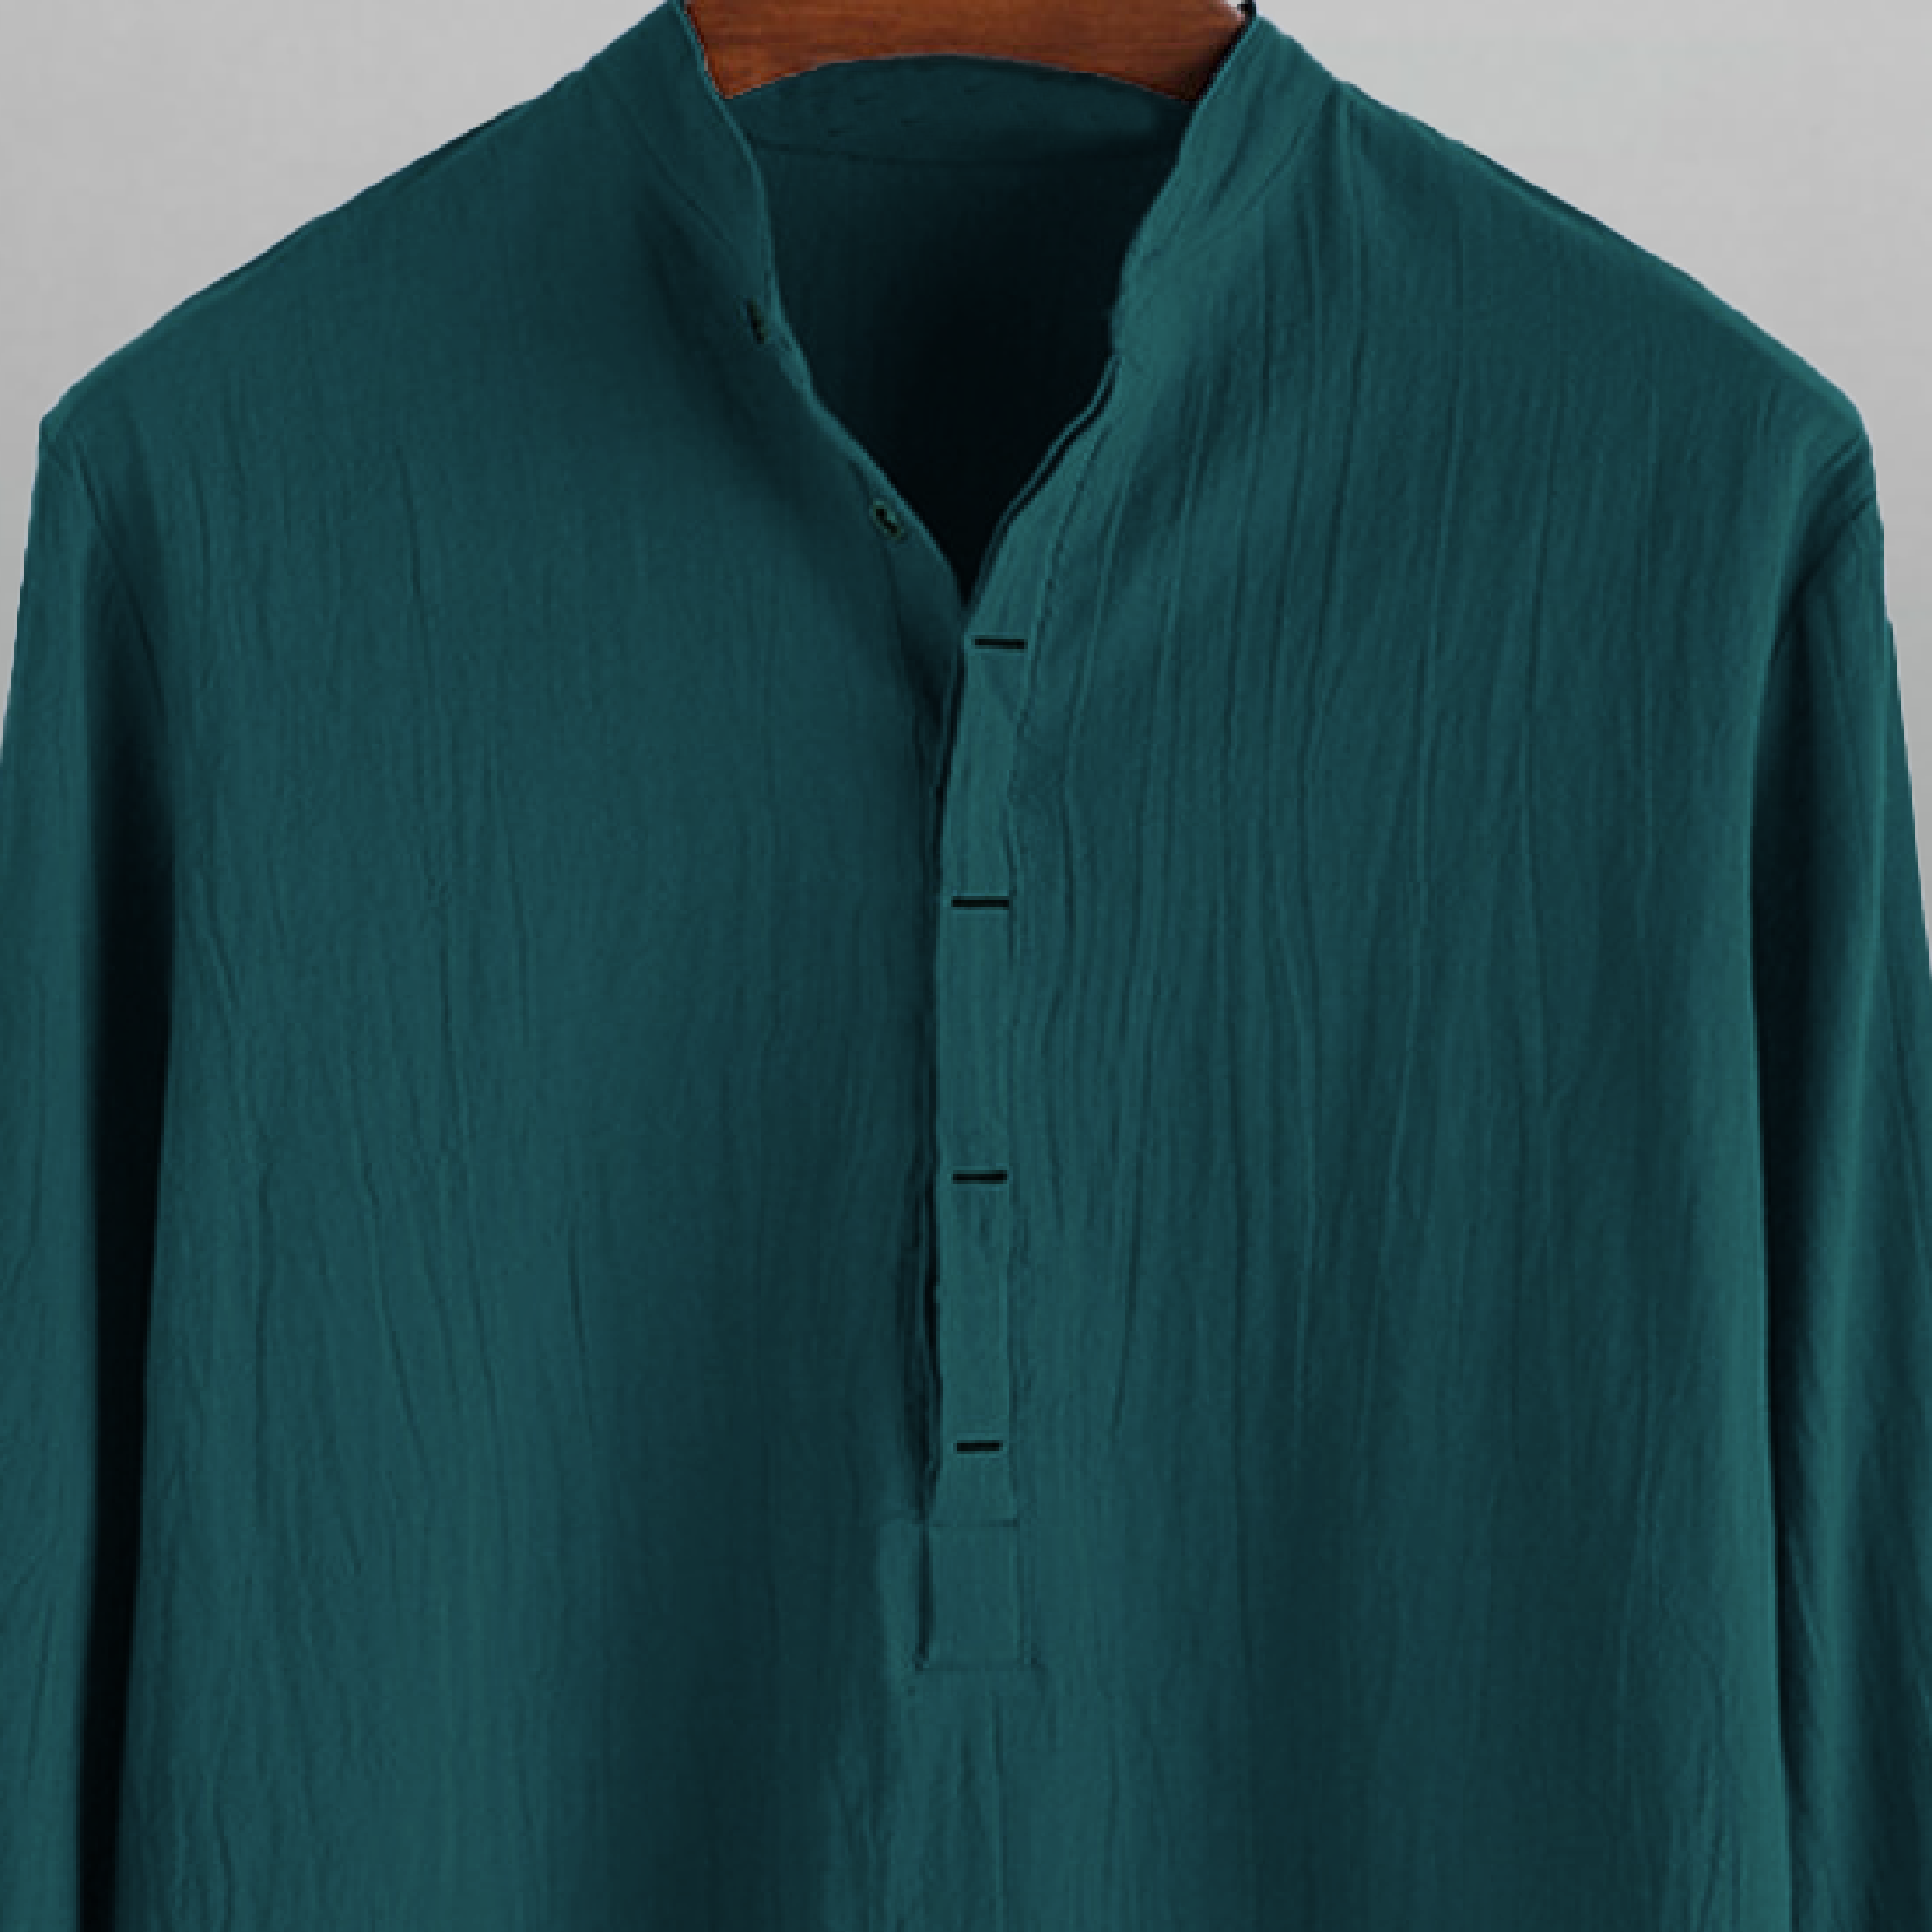 Men's Teal Blue T-shirt style textured shirt-RMS022